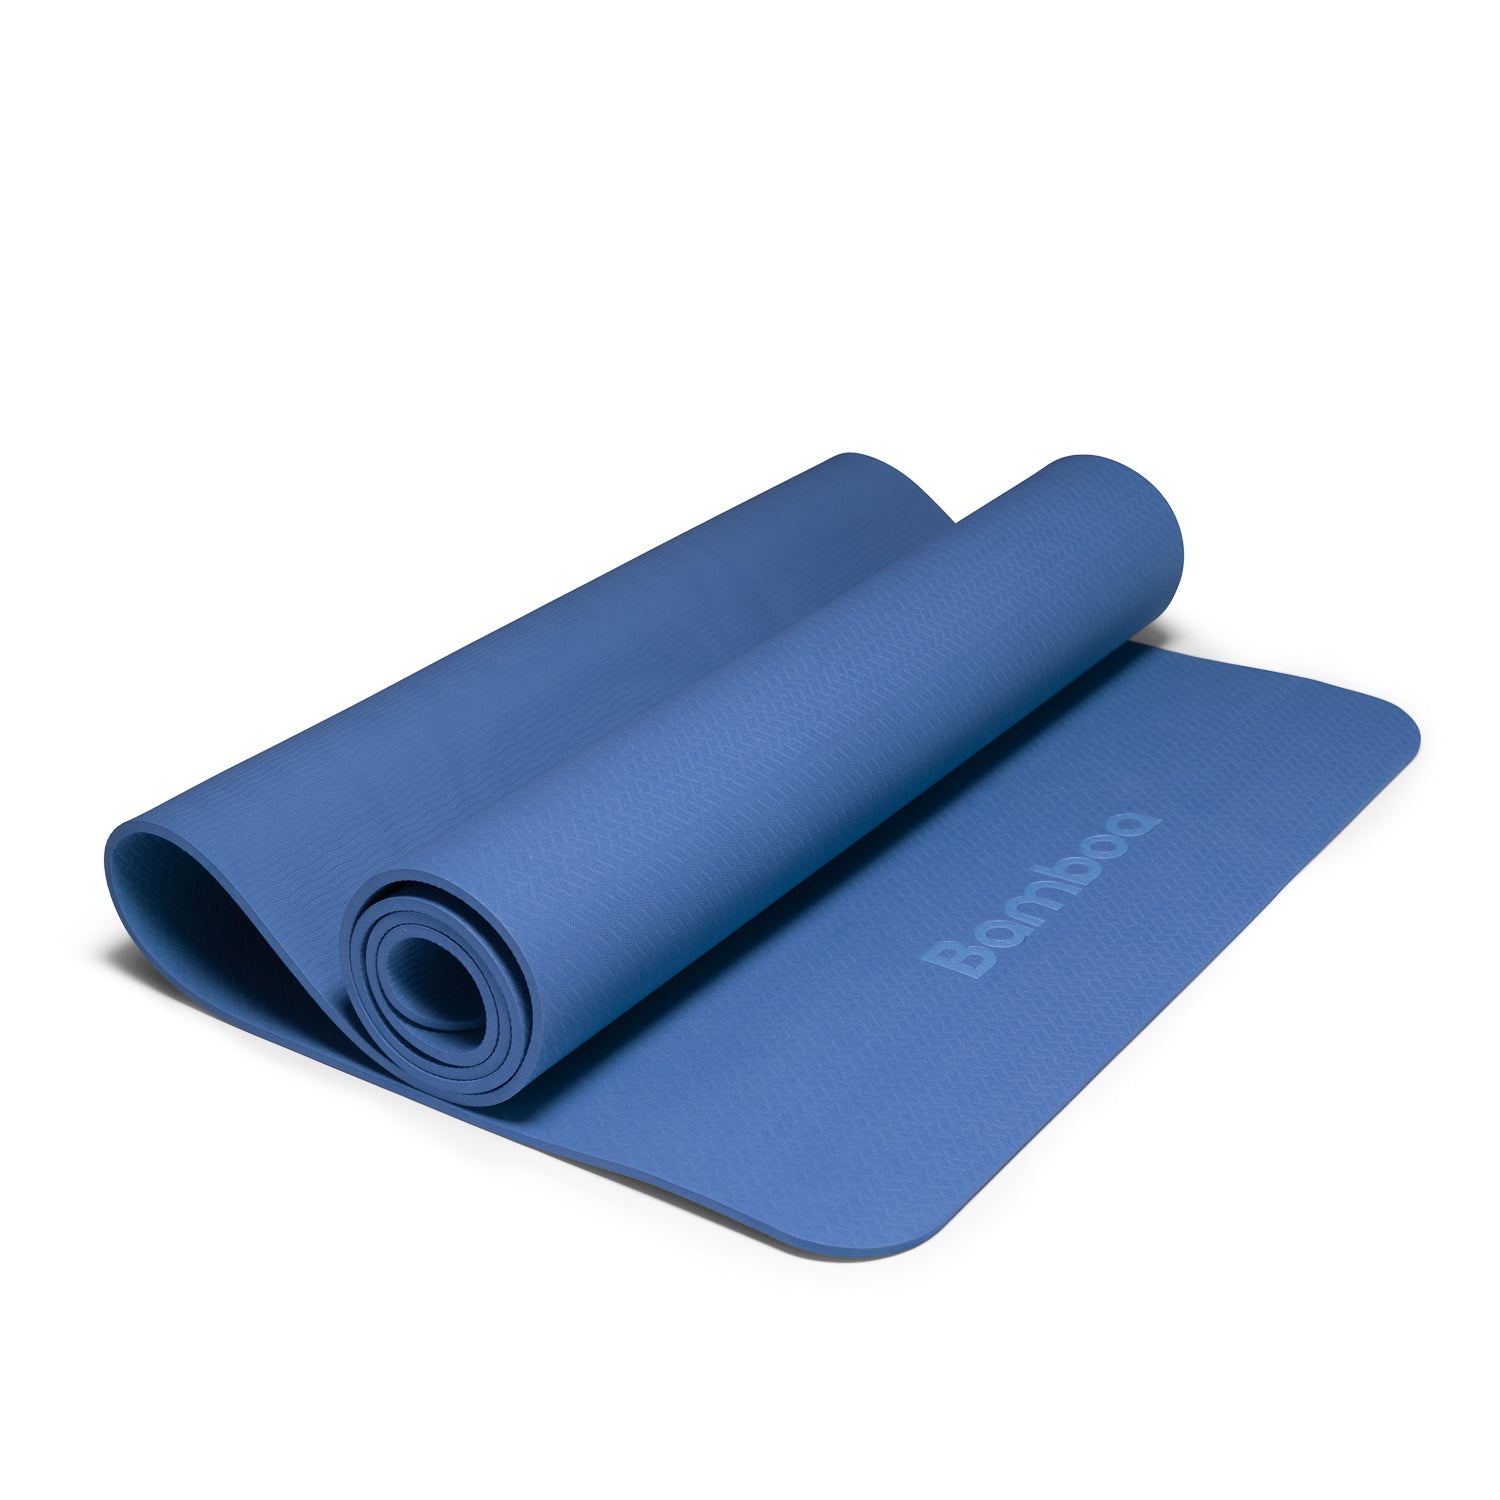 Tappetino yoga Bamboa in schiuma blu 6 mm